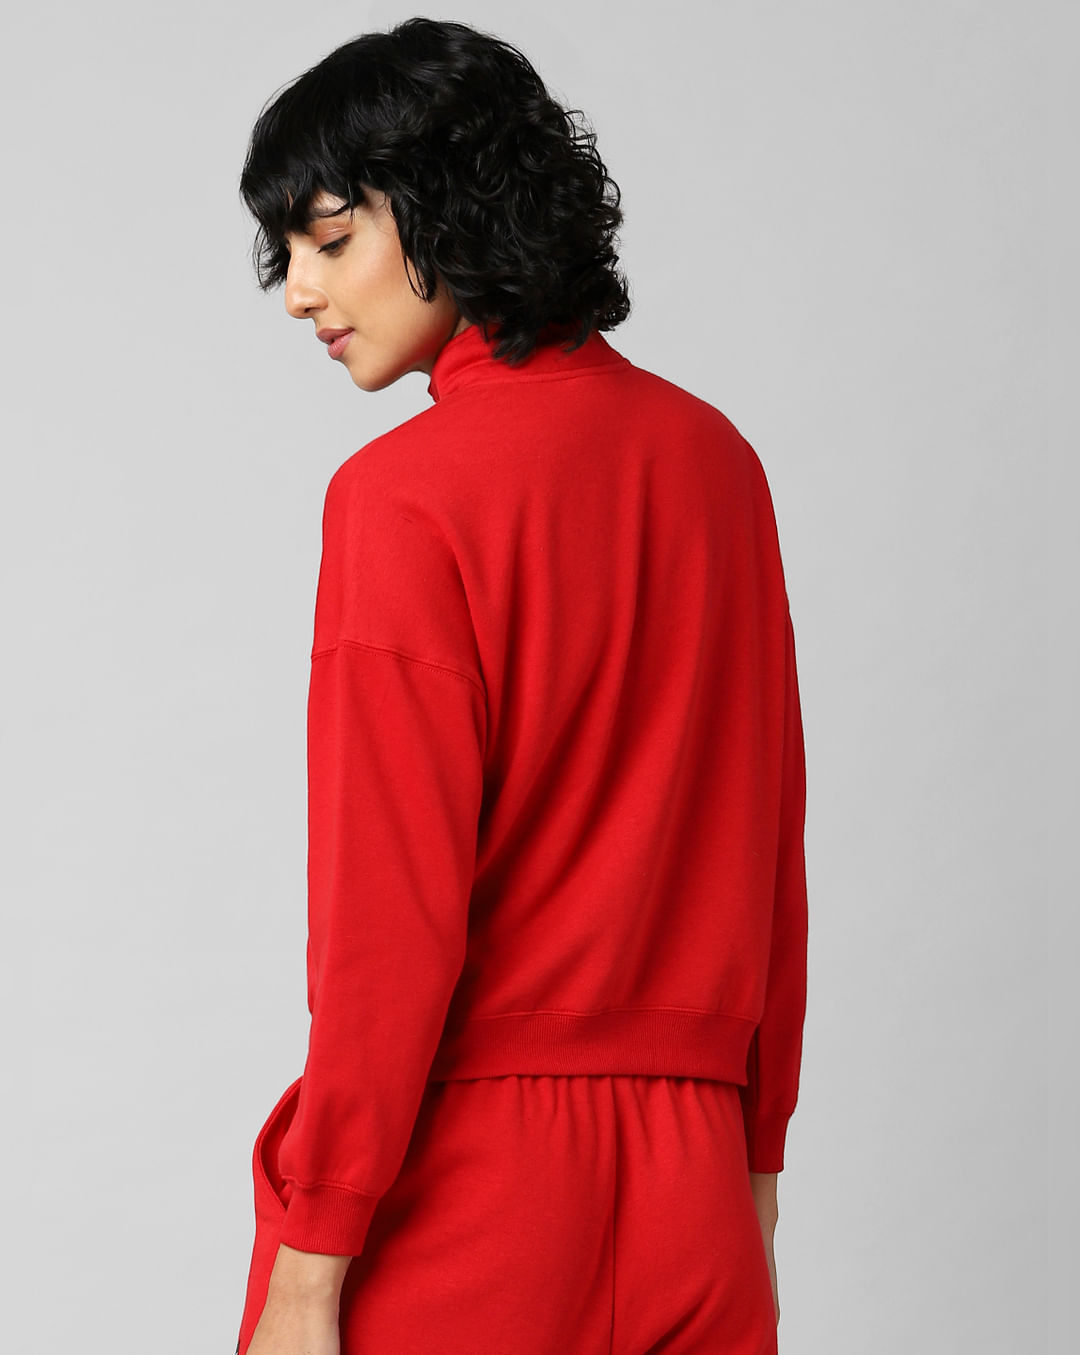 the words in red. Men's Sweatshirt, Women's Boyfriend Look – Gconvo Gear